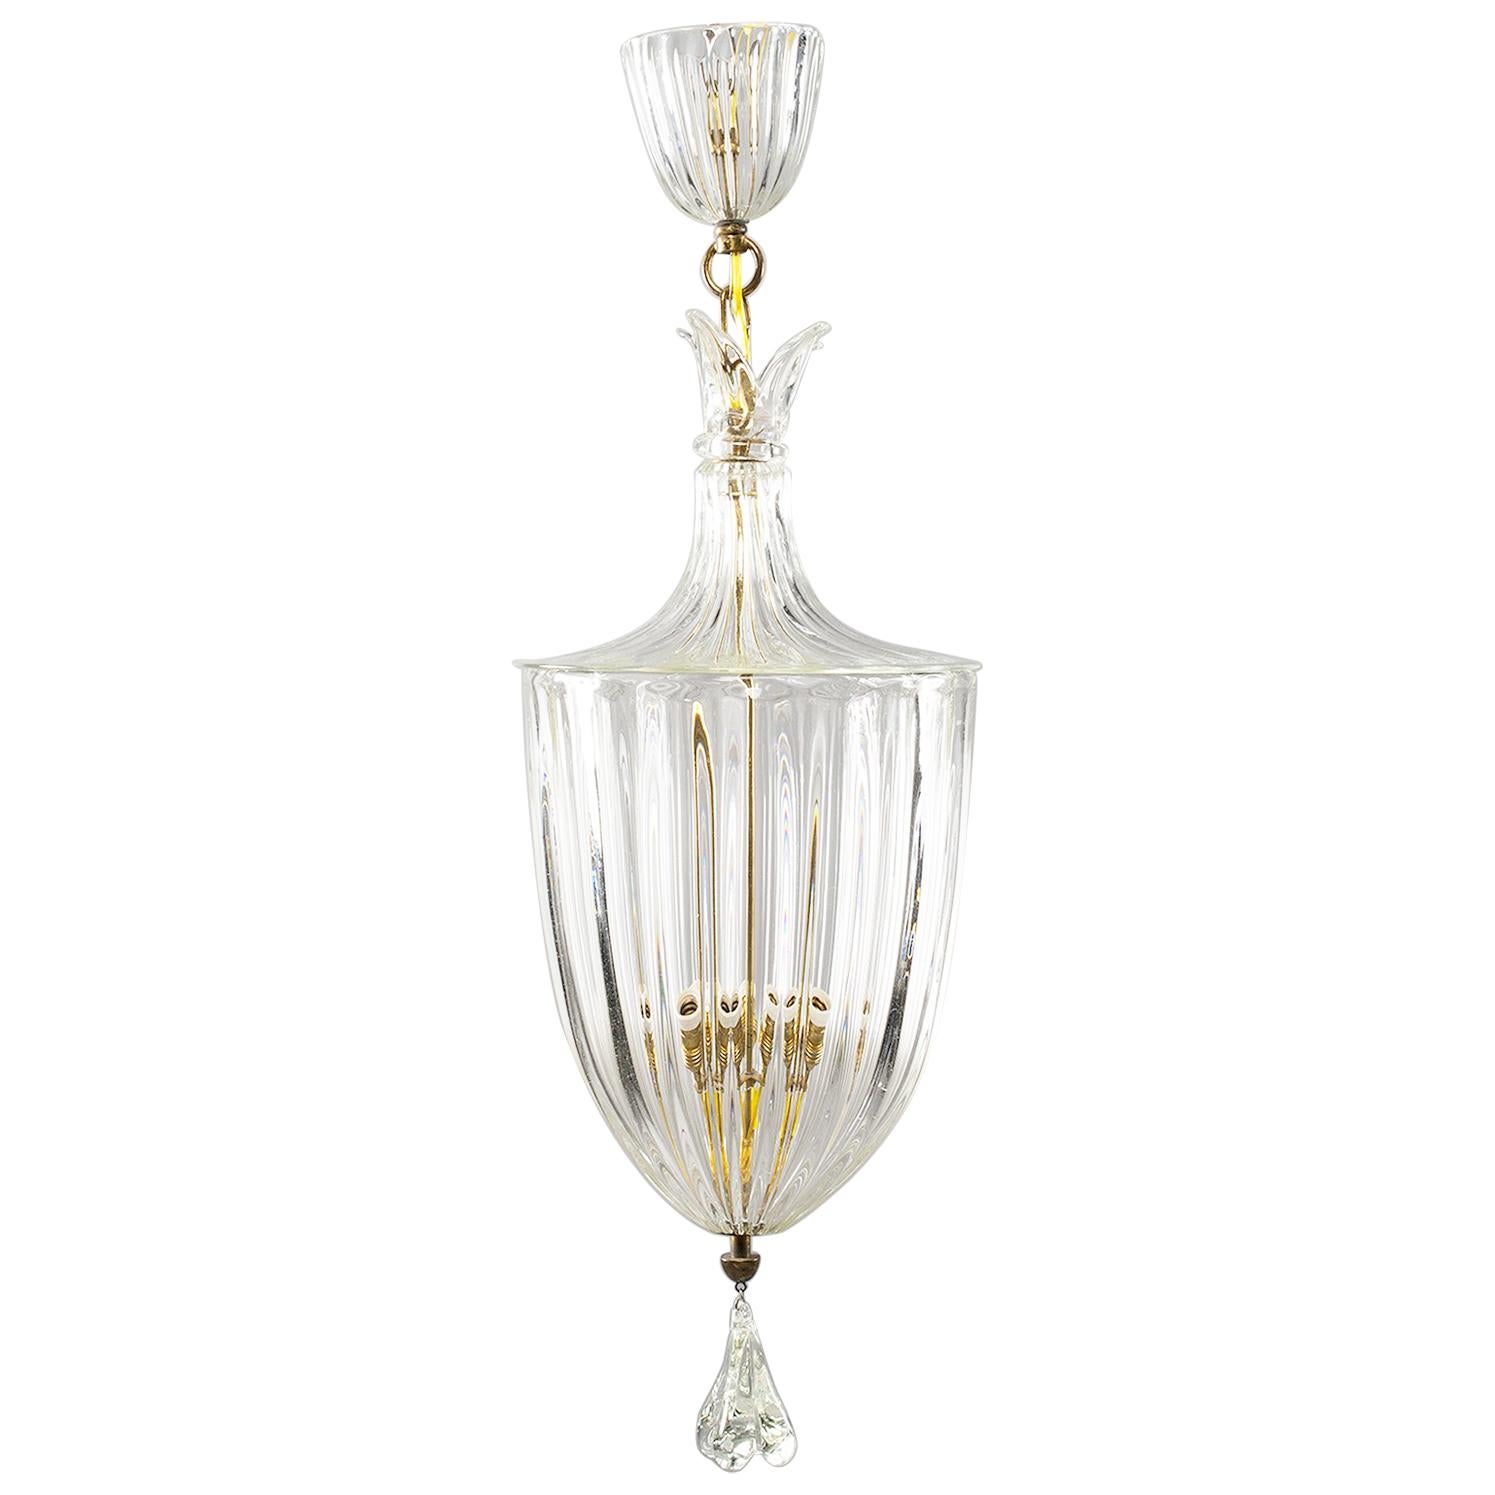 Large Art Deco Era Murano Glass Lantern Attributed to Barovier and Toso